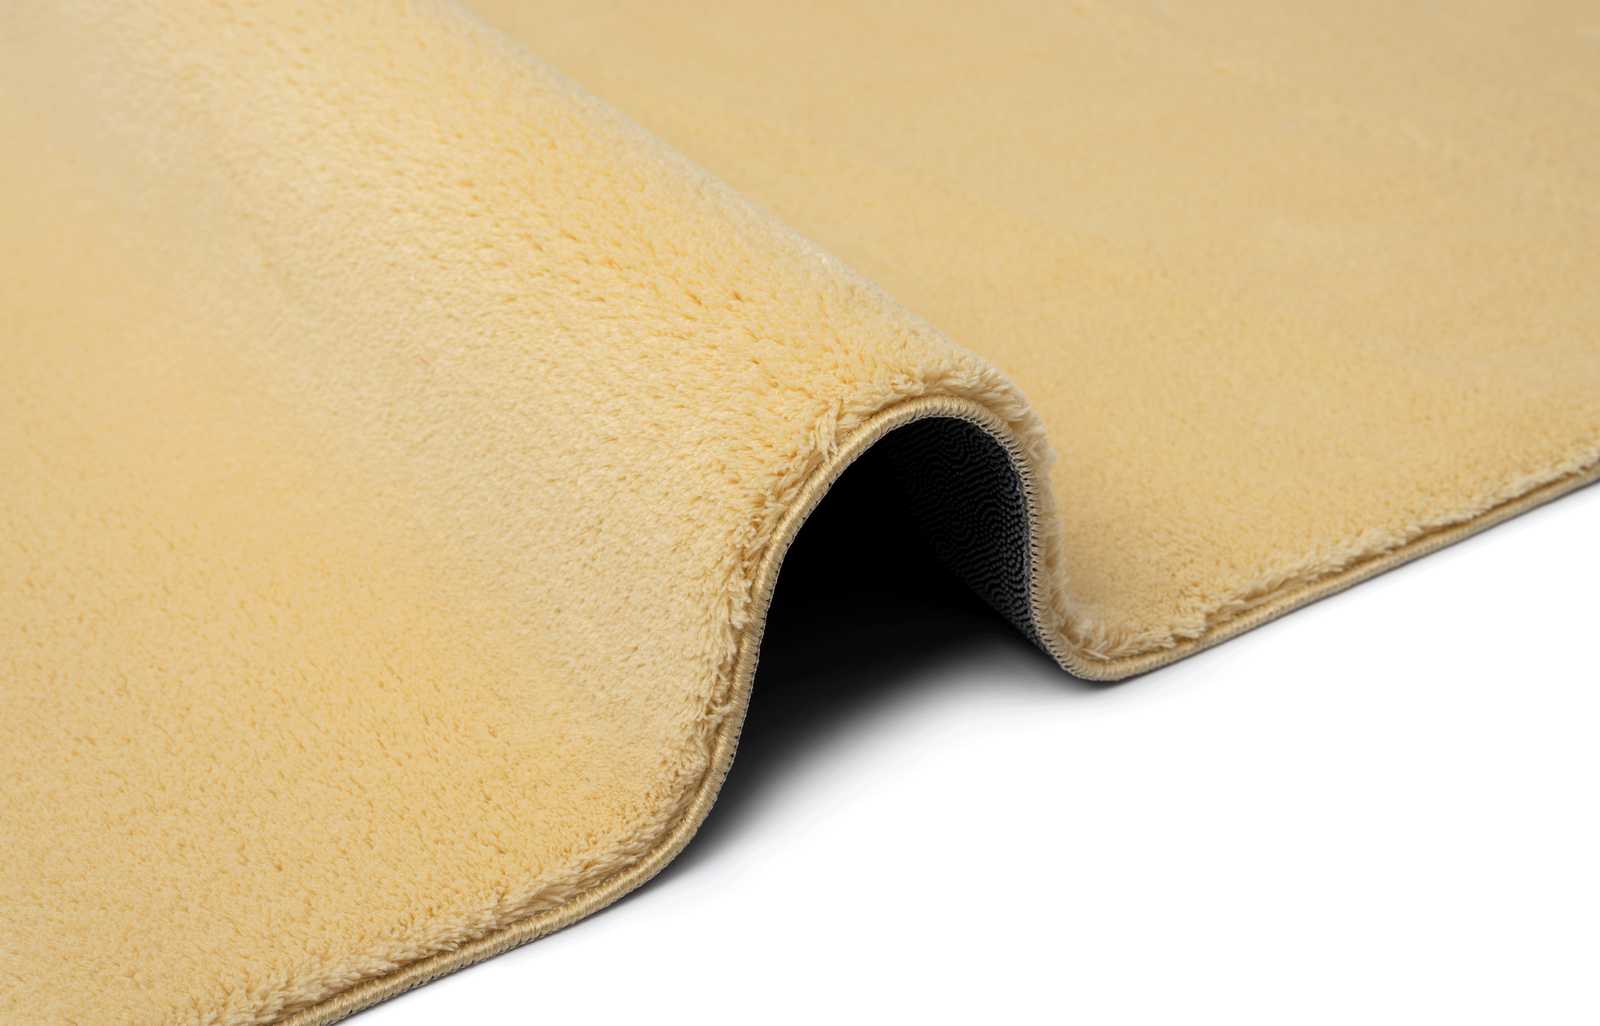             Knuffelzacht hoogpolig tapijt in goud - 110 x 60 cm
        